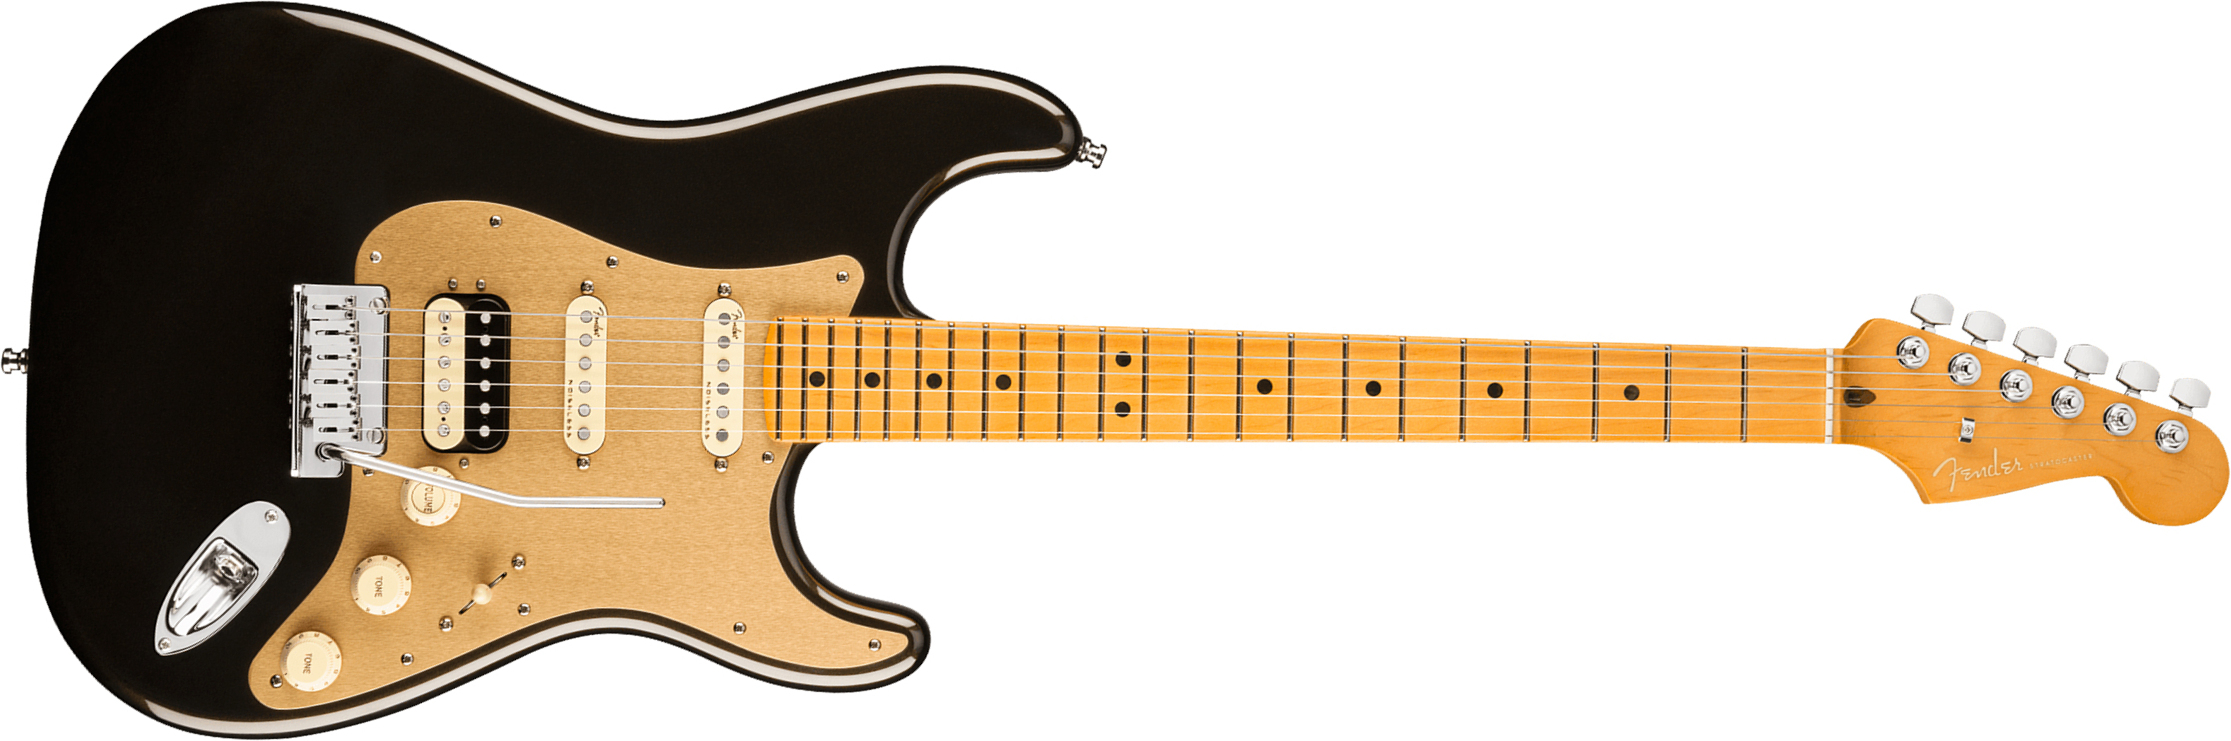 Fender Strat American Ultra Hss 2019 Usa Mn - Texas Tea - Str shape electric guitar - Main picture